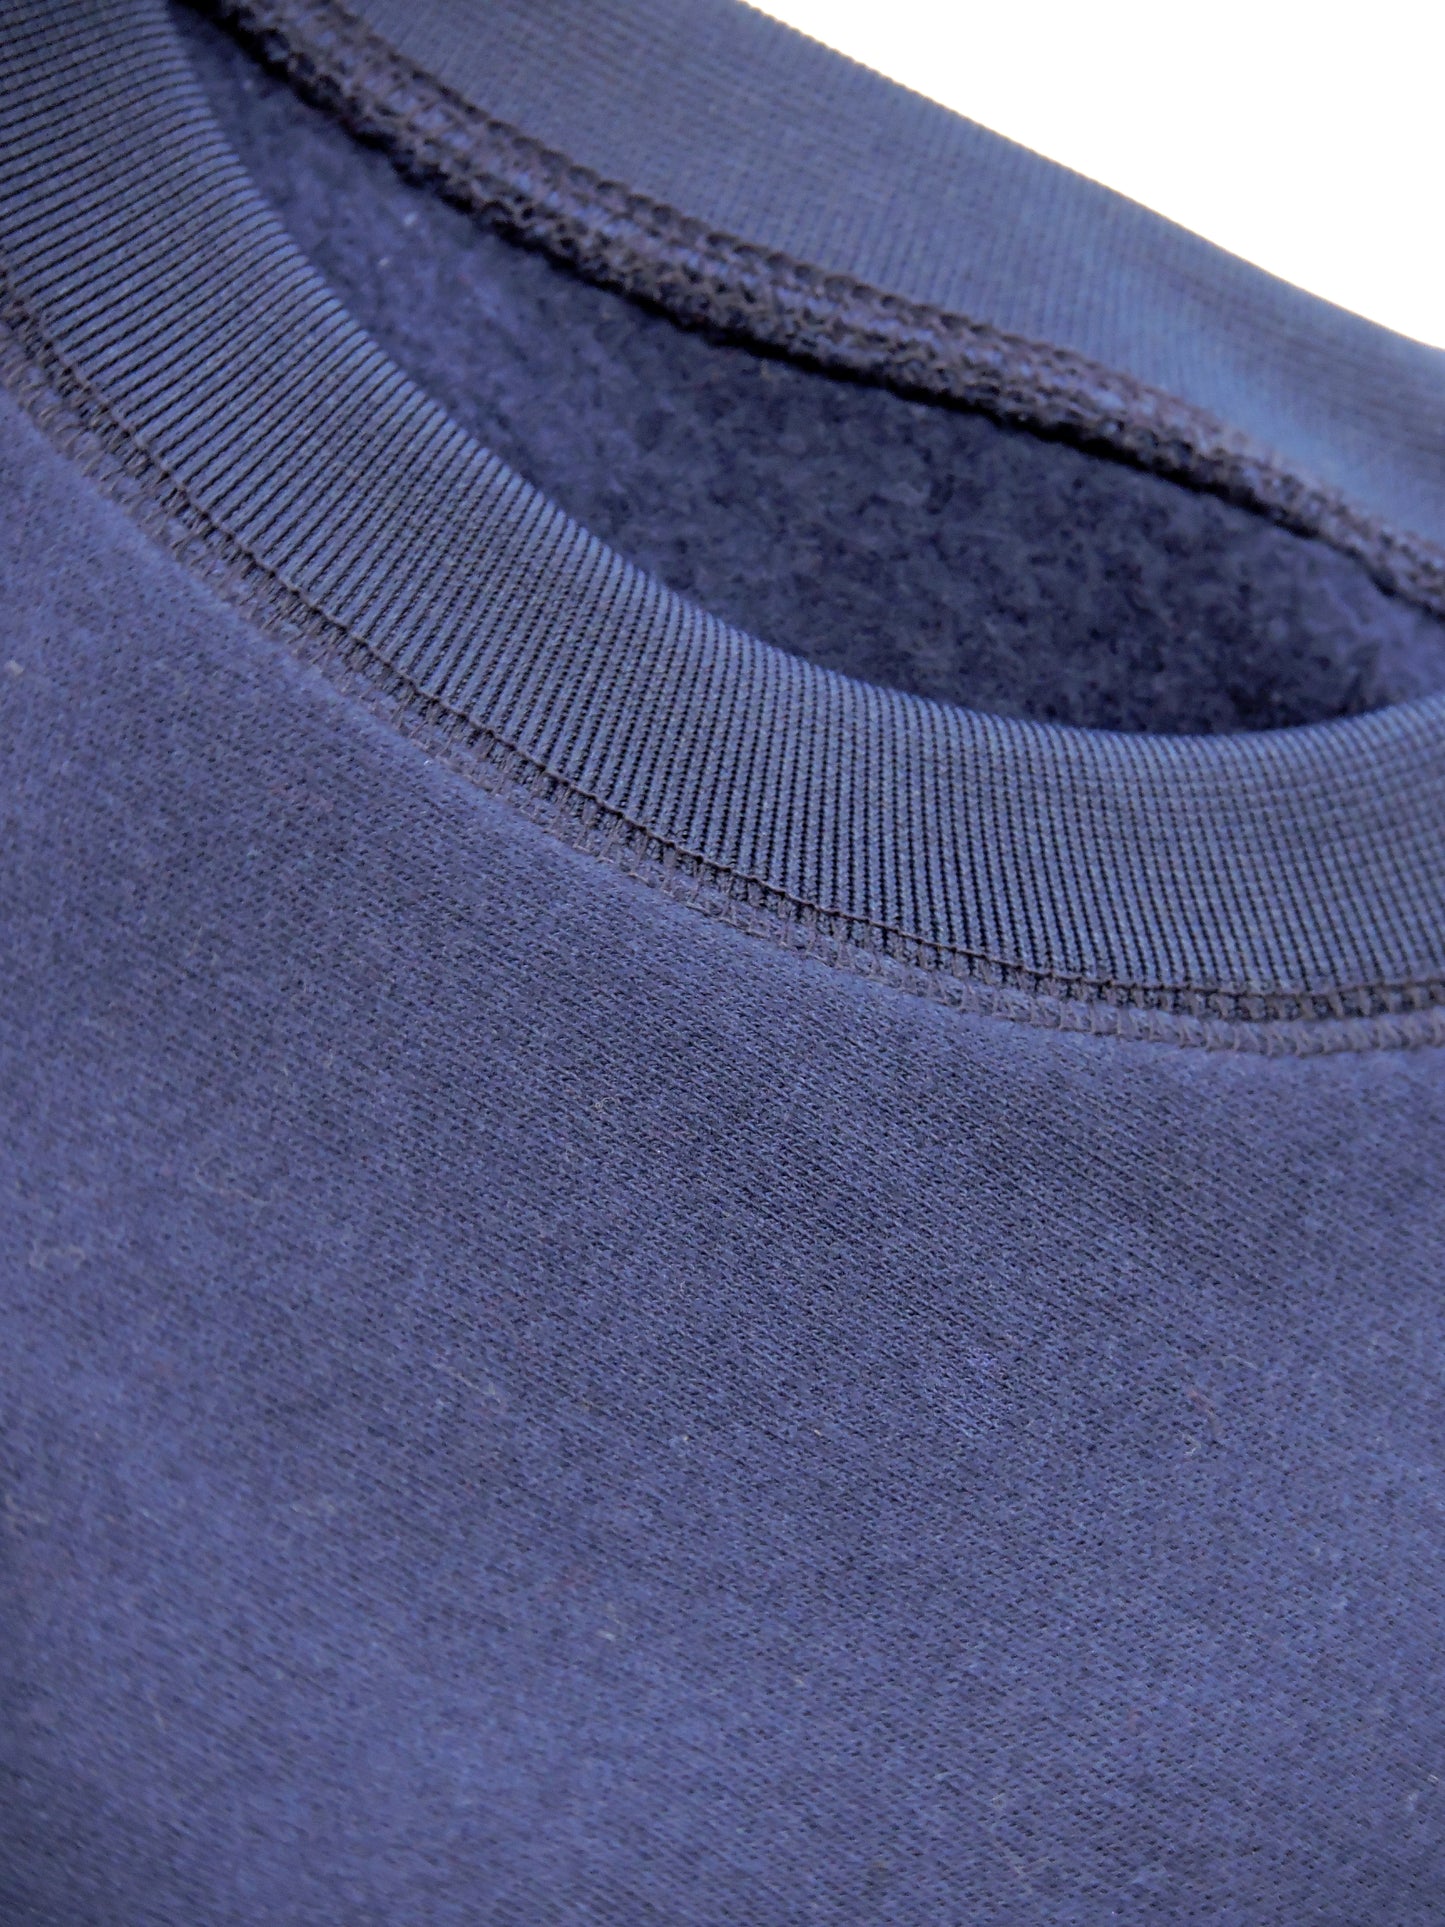 Close up of crewneck, knitting around the neckline and warm fleece interior